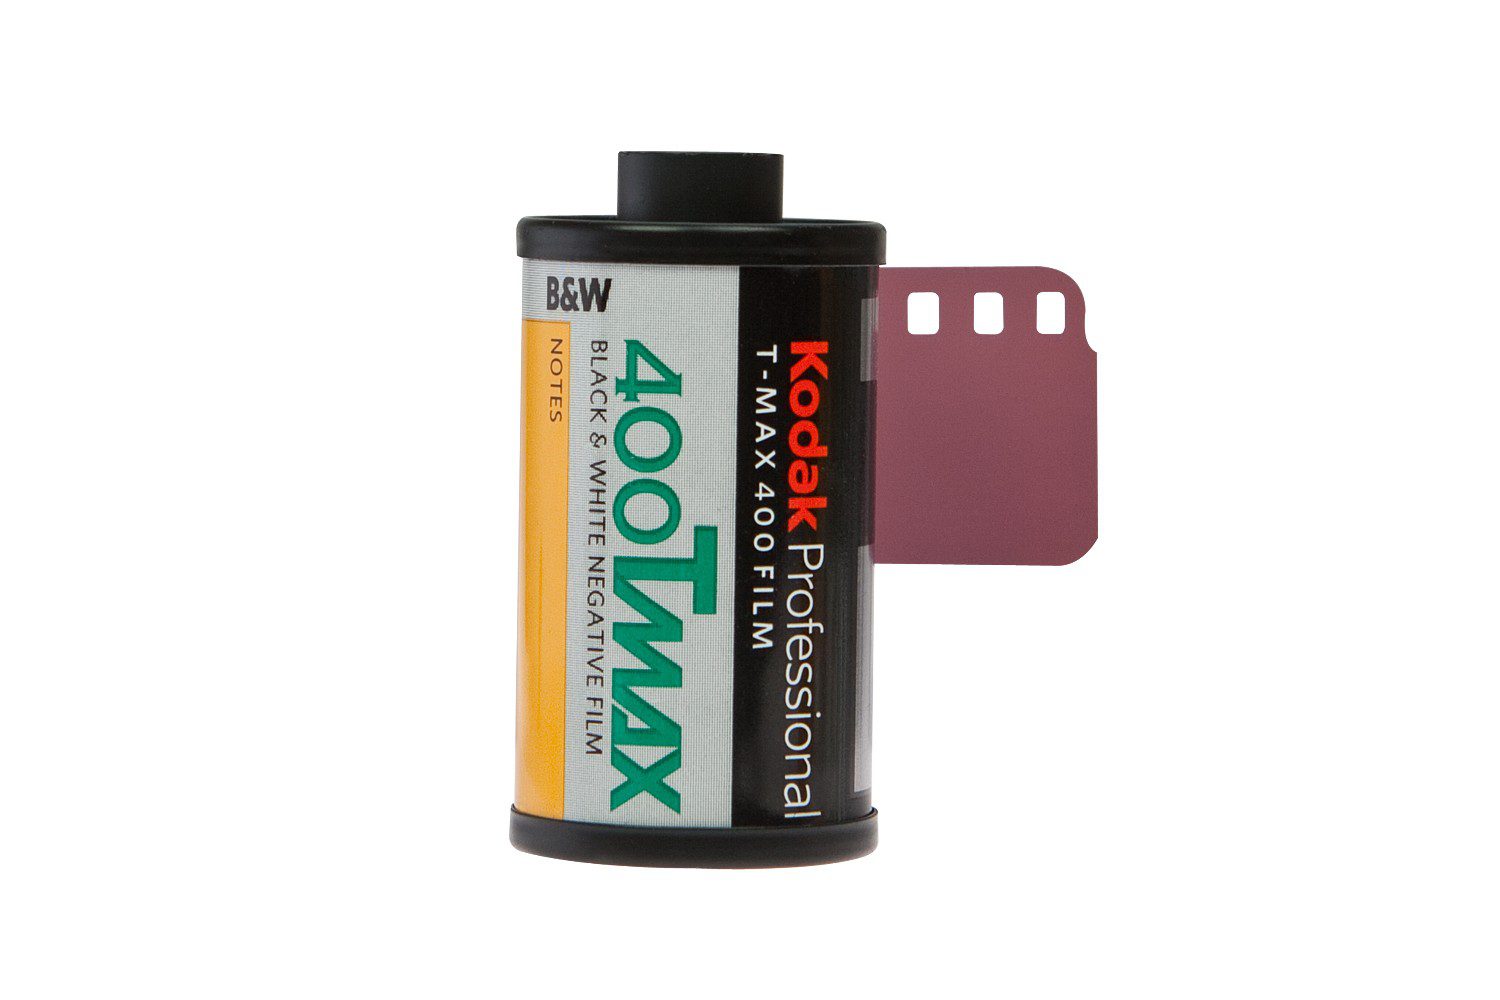 Kodak TMax 400 135/36 Pellicola negativo bianco e nero TMY 